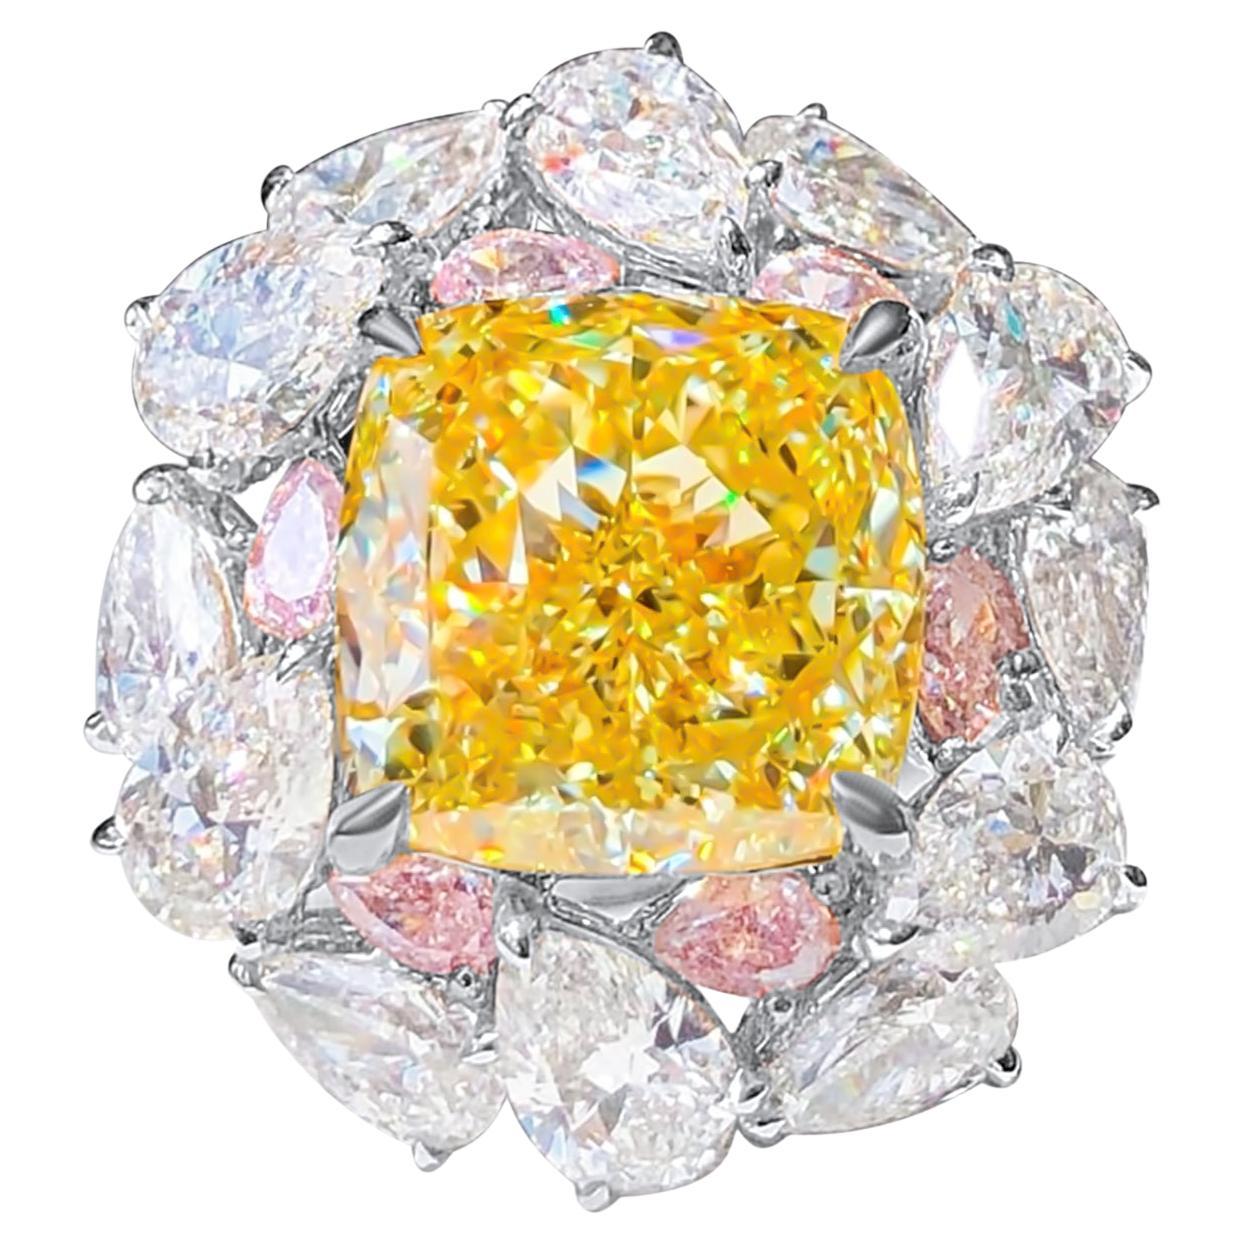 7.01 Carat Intense Yellow Cushion Cut Diamond Ring GIA Certified For Sale